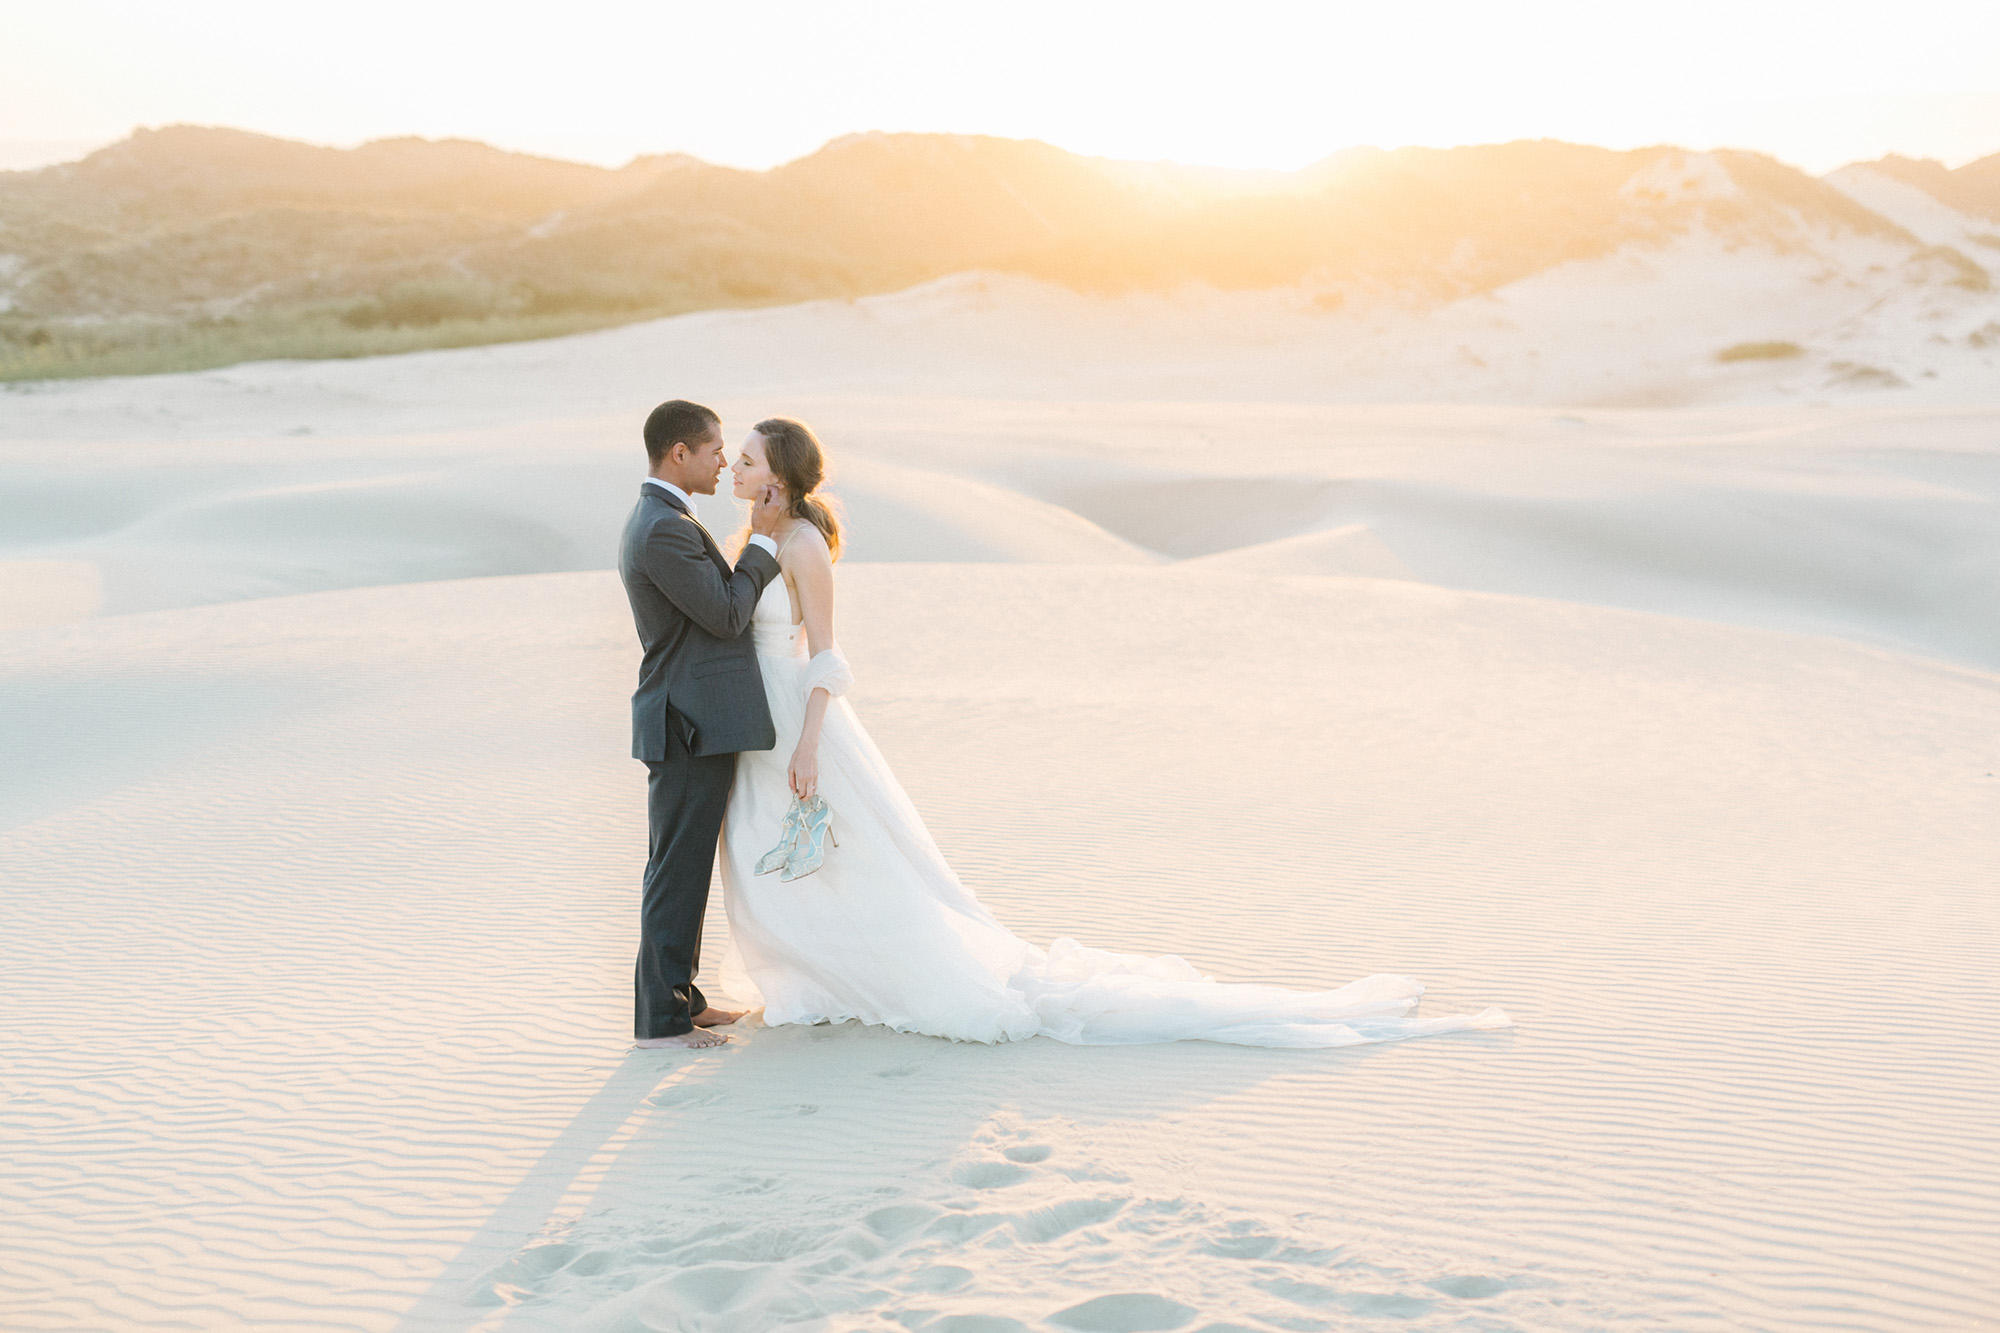 Sand dunes elopement inspiration by California elopement photographer Tenth & Grace